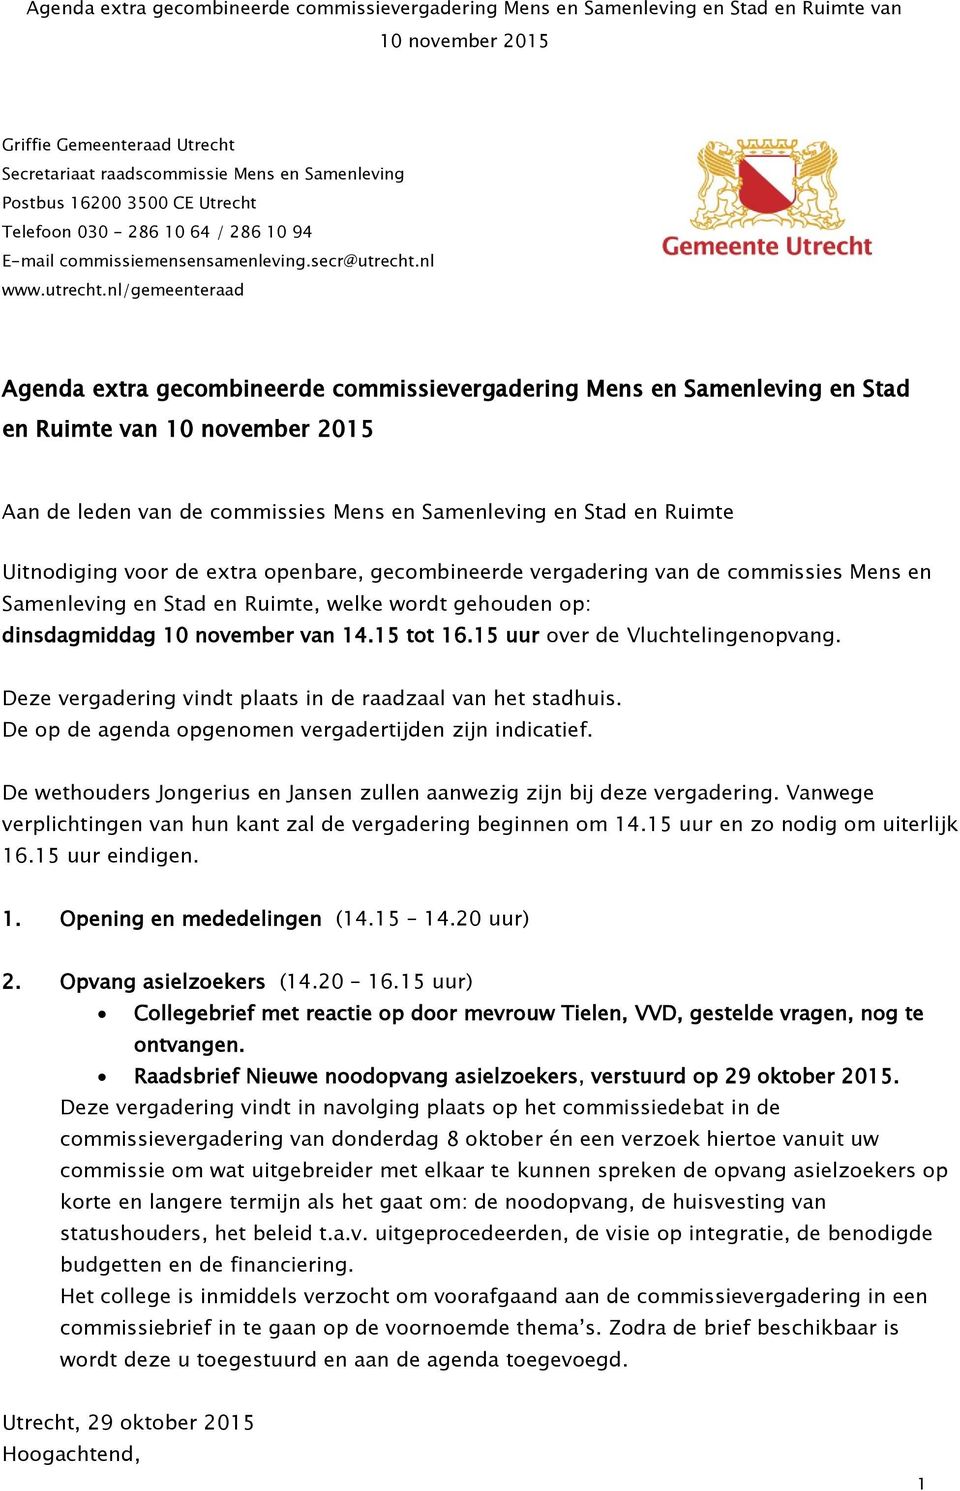 raadscommissie Mens en Samenleving Postbus 16200 3500 CE Utrecht Telefoon 030-286 10 64 / 286 10 94 E-mail commissiemensensamenleving.secr@utrecht.